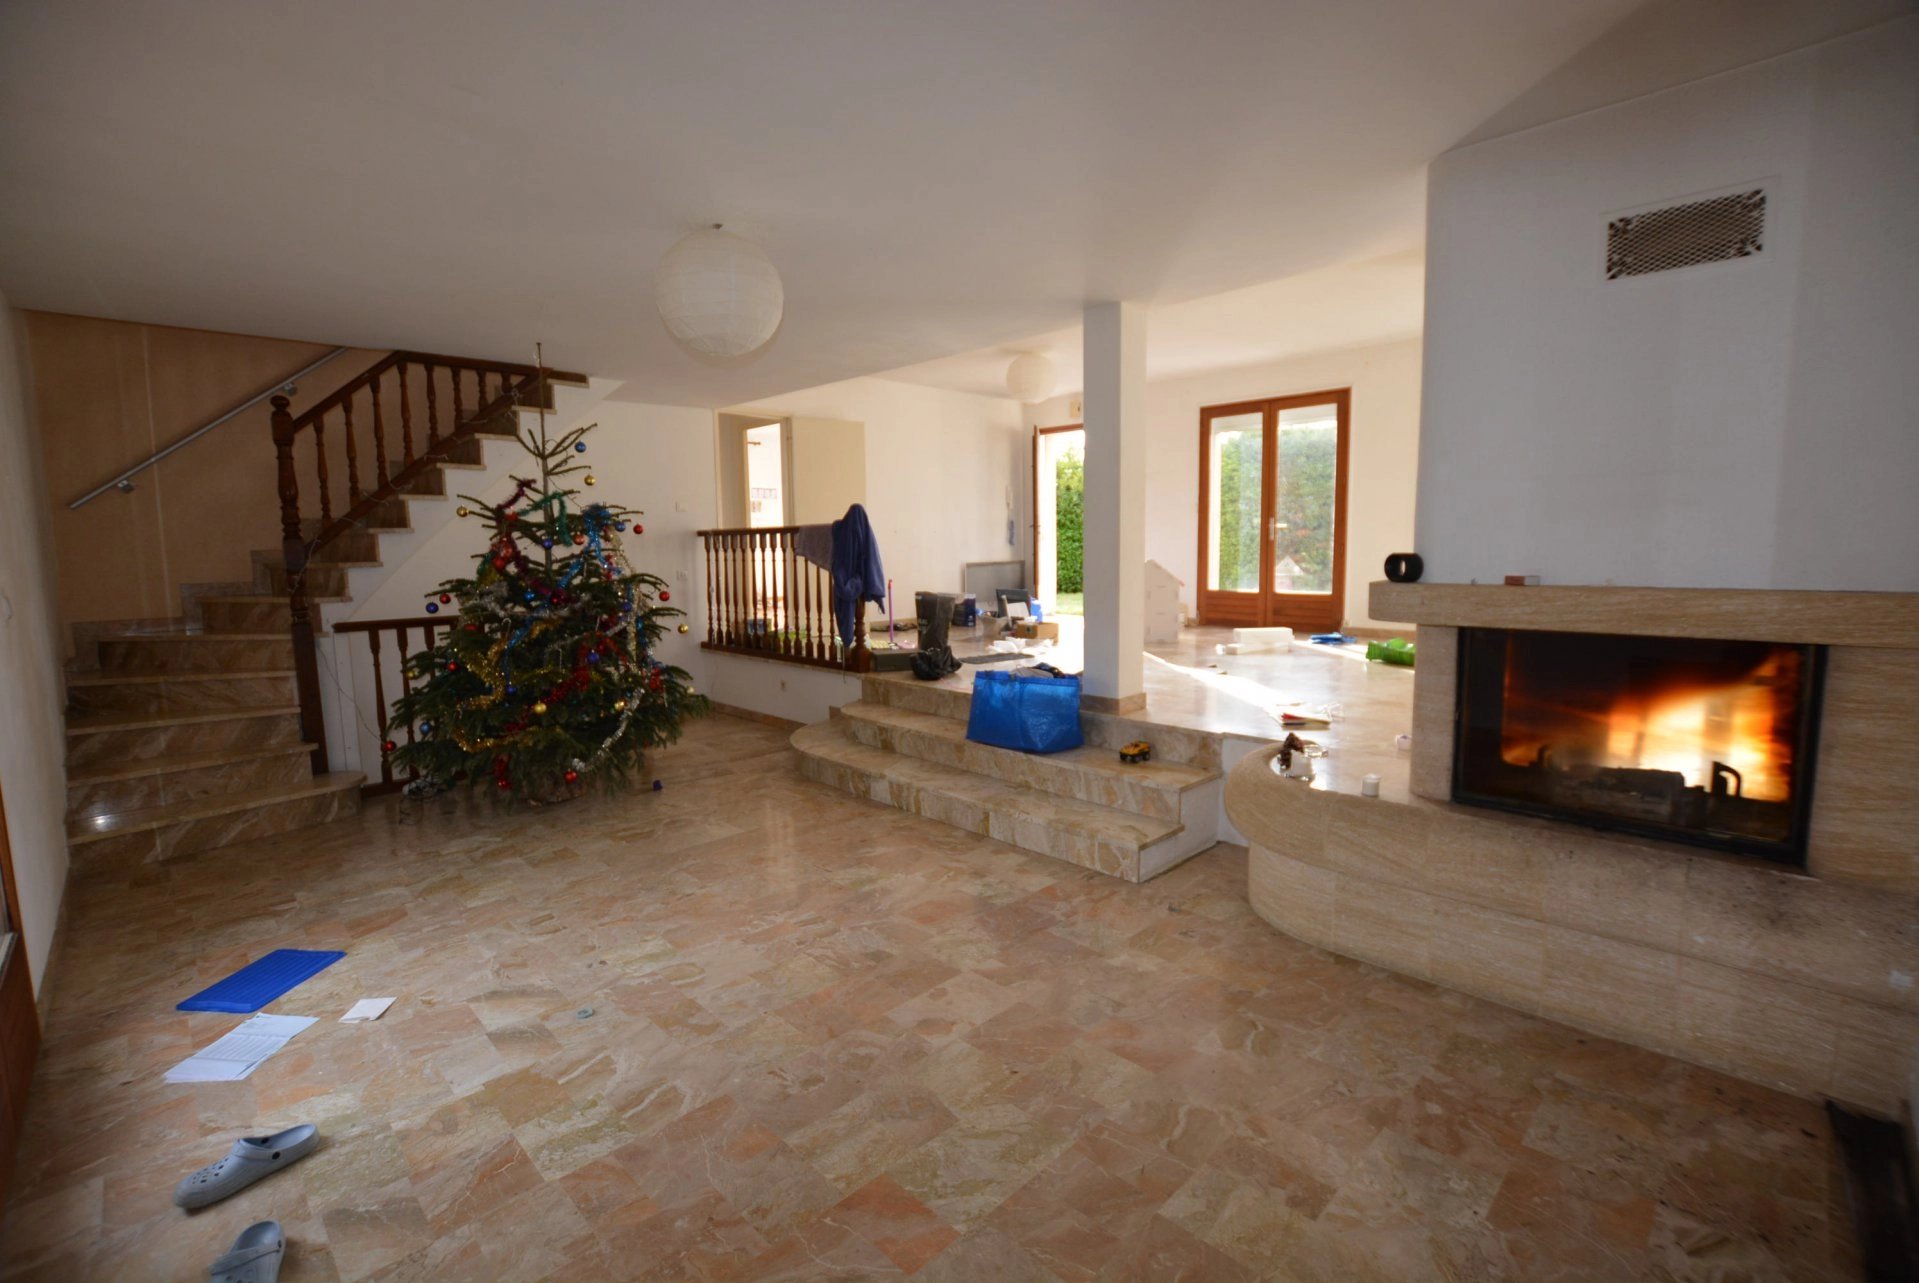 Living-room Tile Fireplace